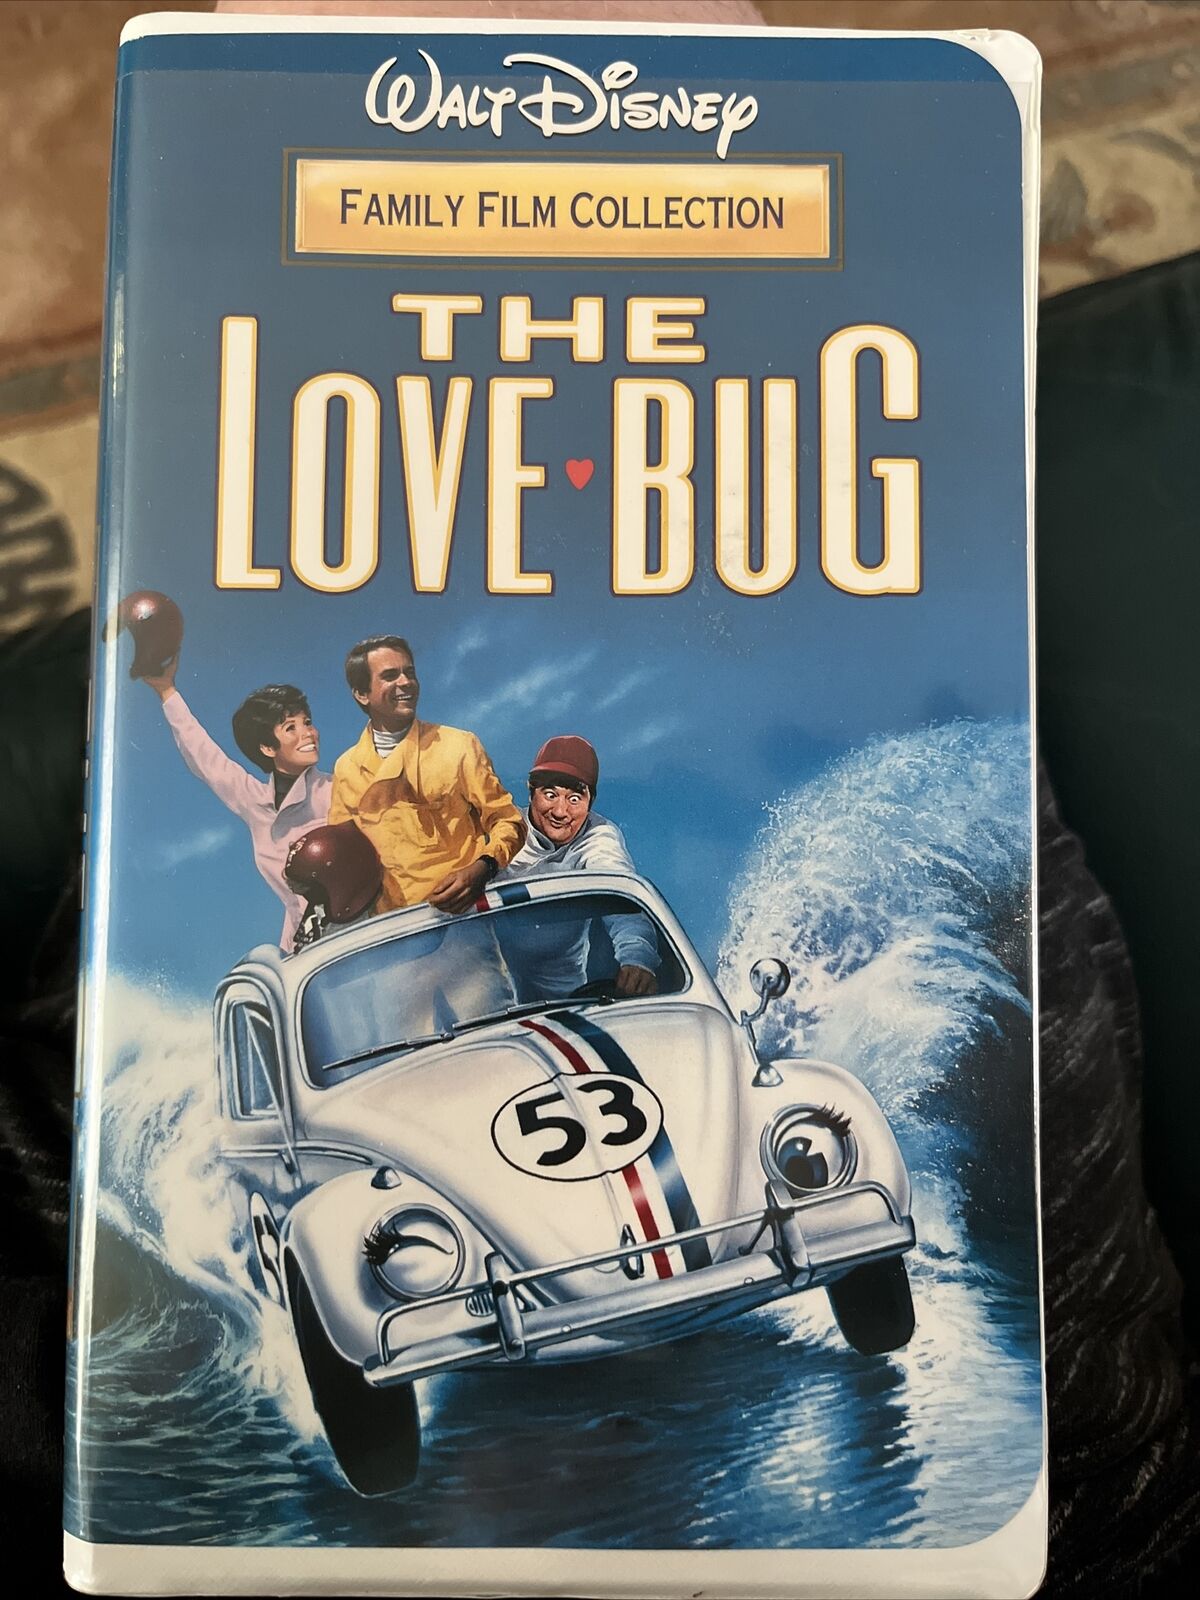 The Love Bug (VHS, 1996) for sale online | eBay